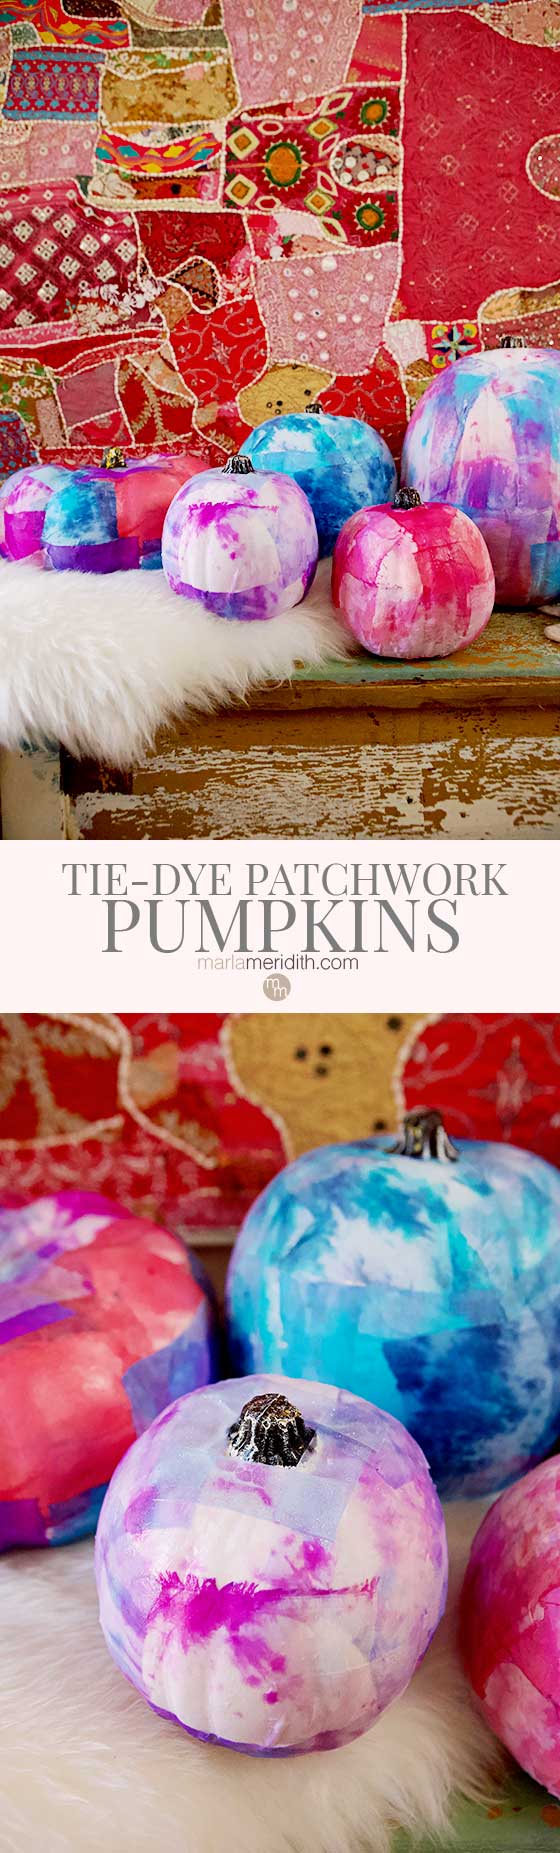 Holiday Craft: Tie-Dye Patchwork Pumpkins | MarlaMeridith.com